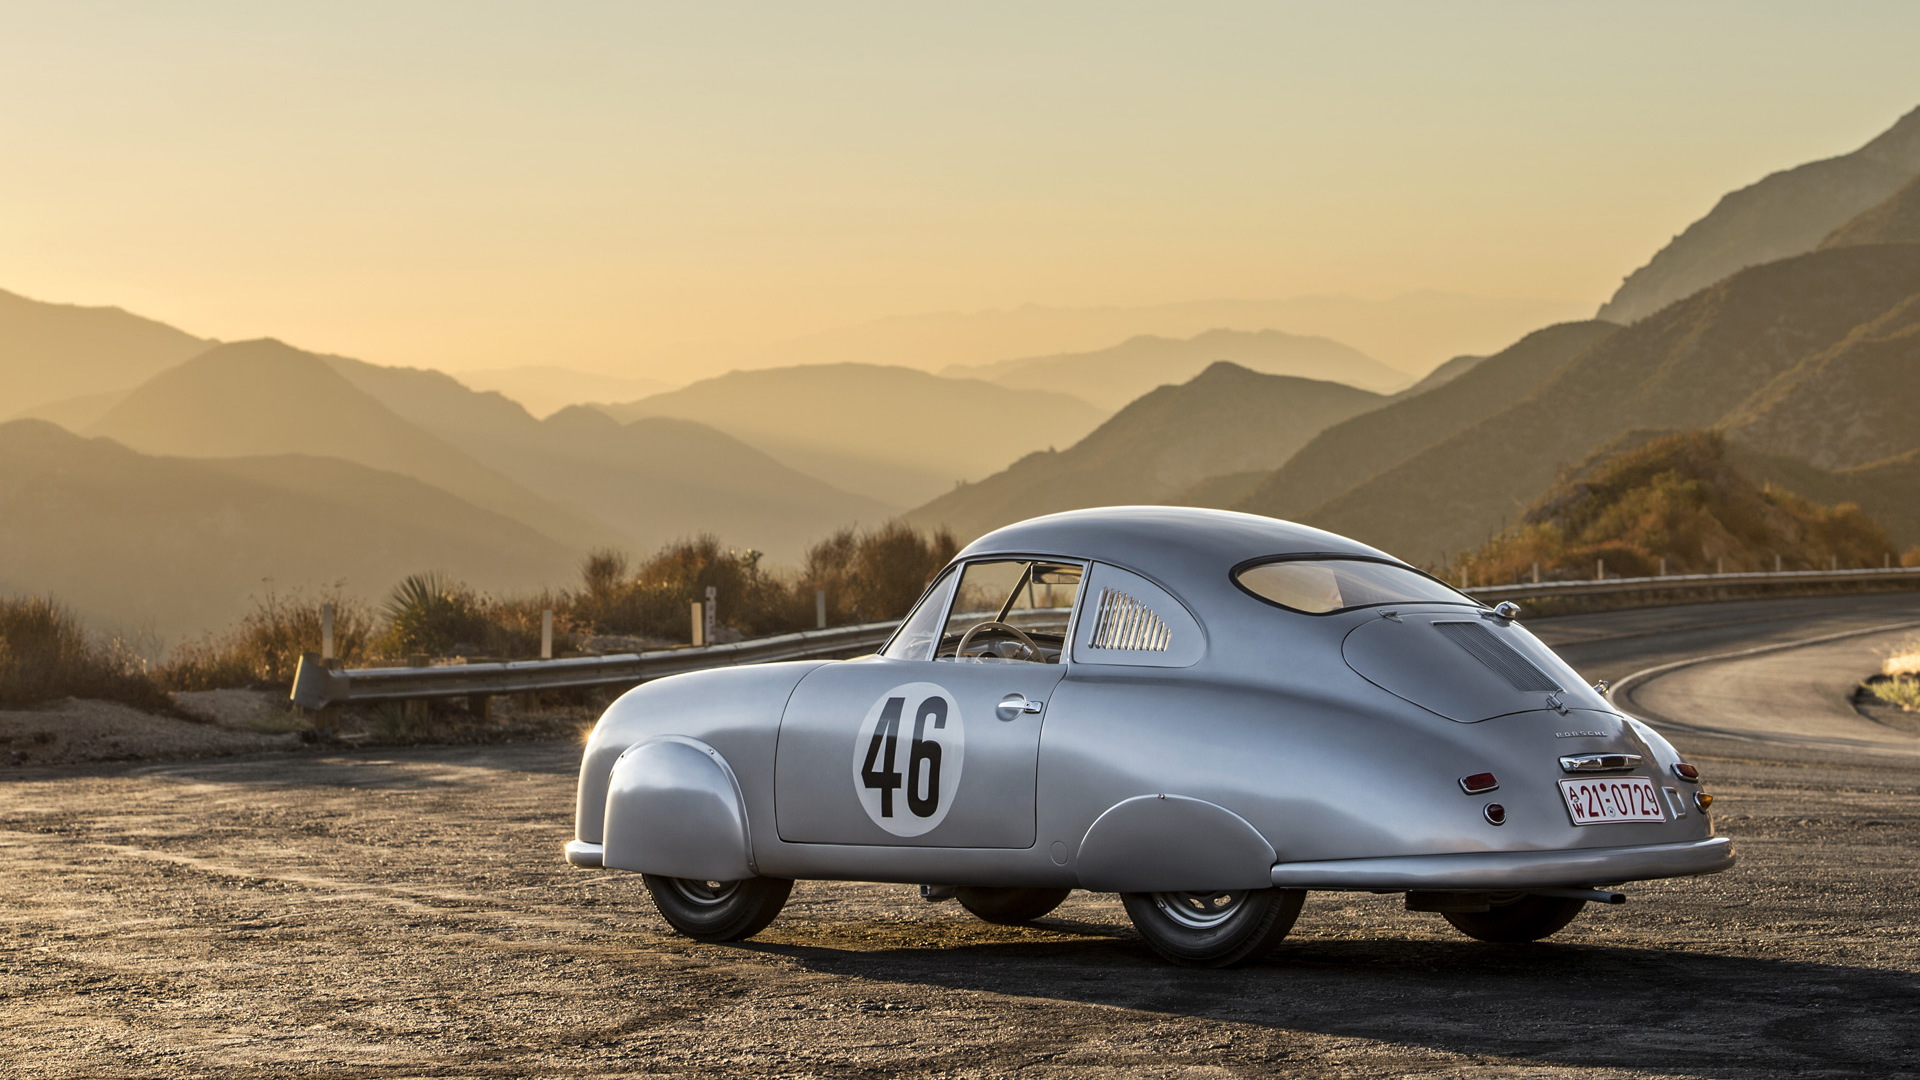 Meet the grand daddy of all Porsche race cars, the 1951 356 SL